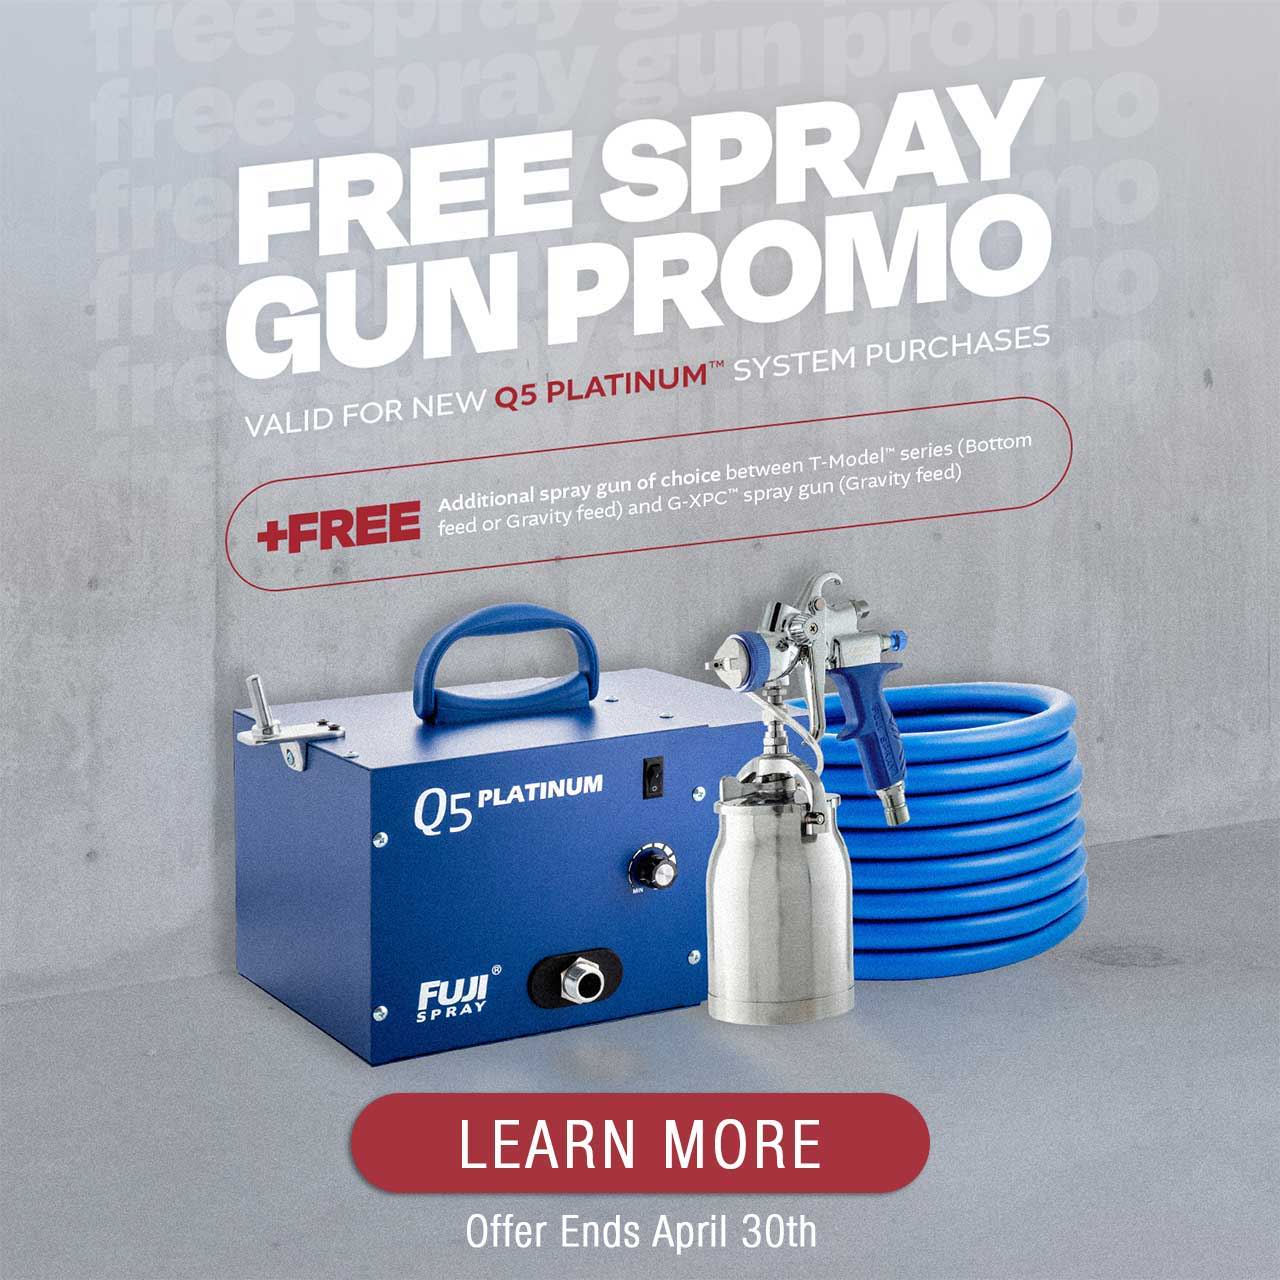 Fuji Spray Free Spray Gun Promo